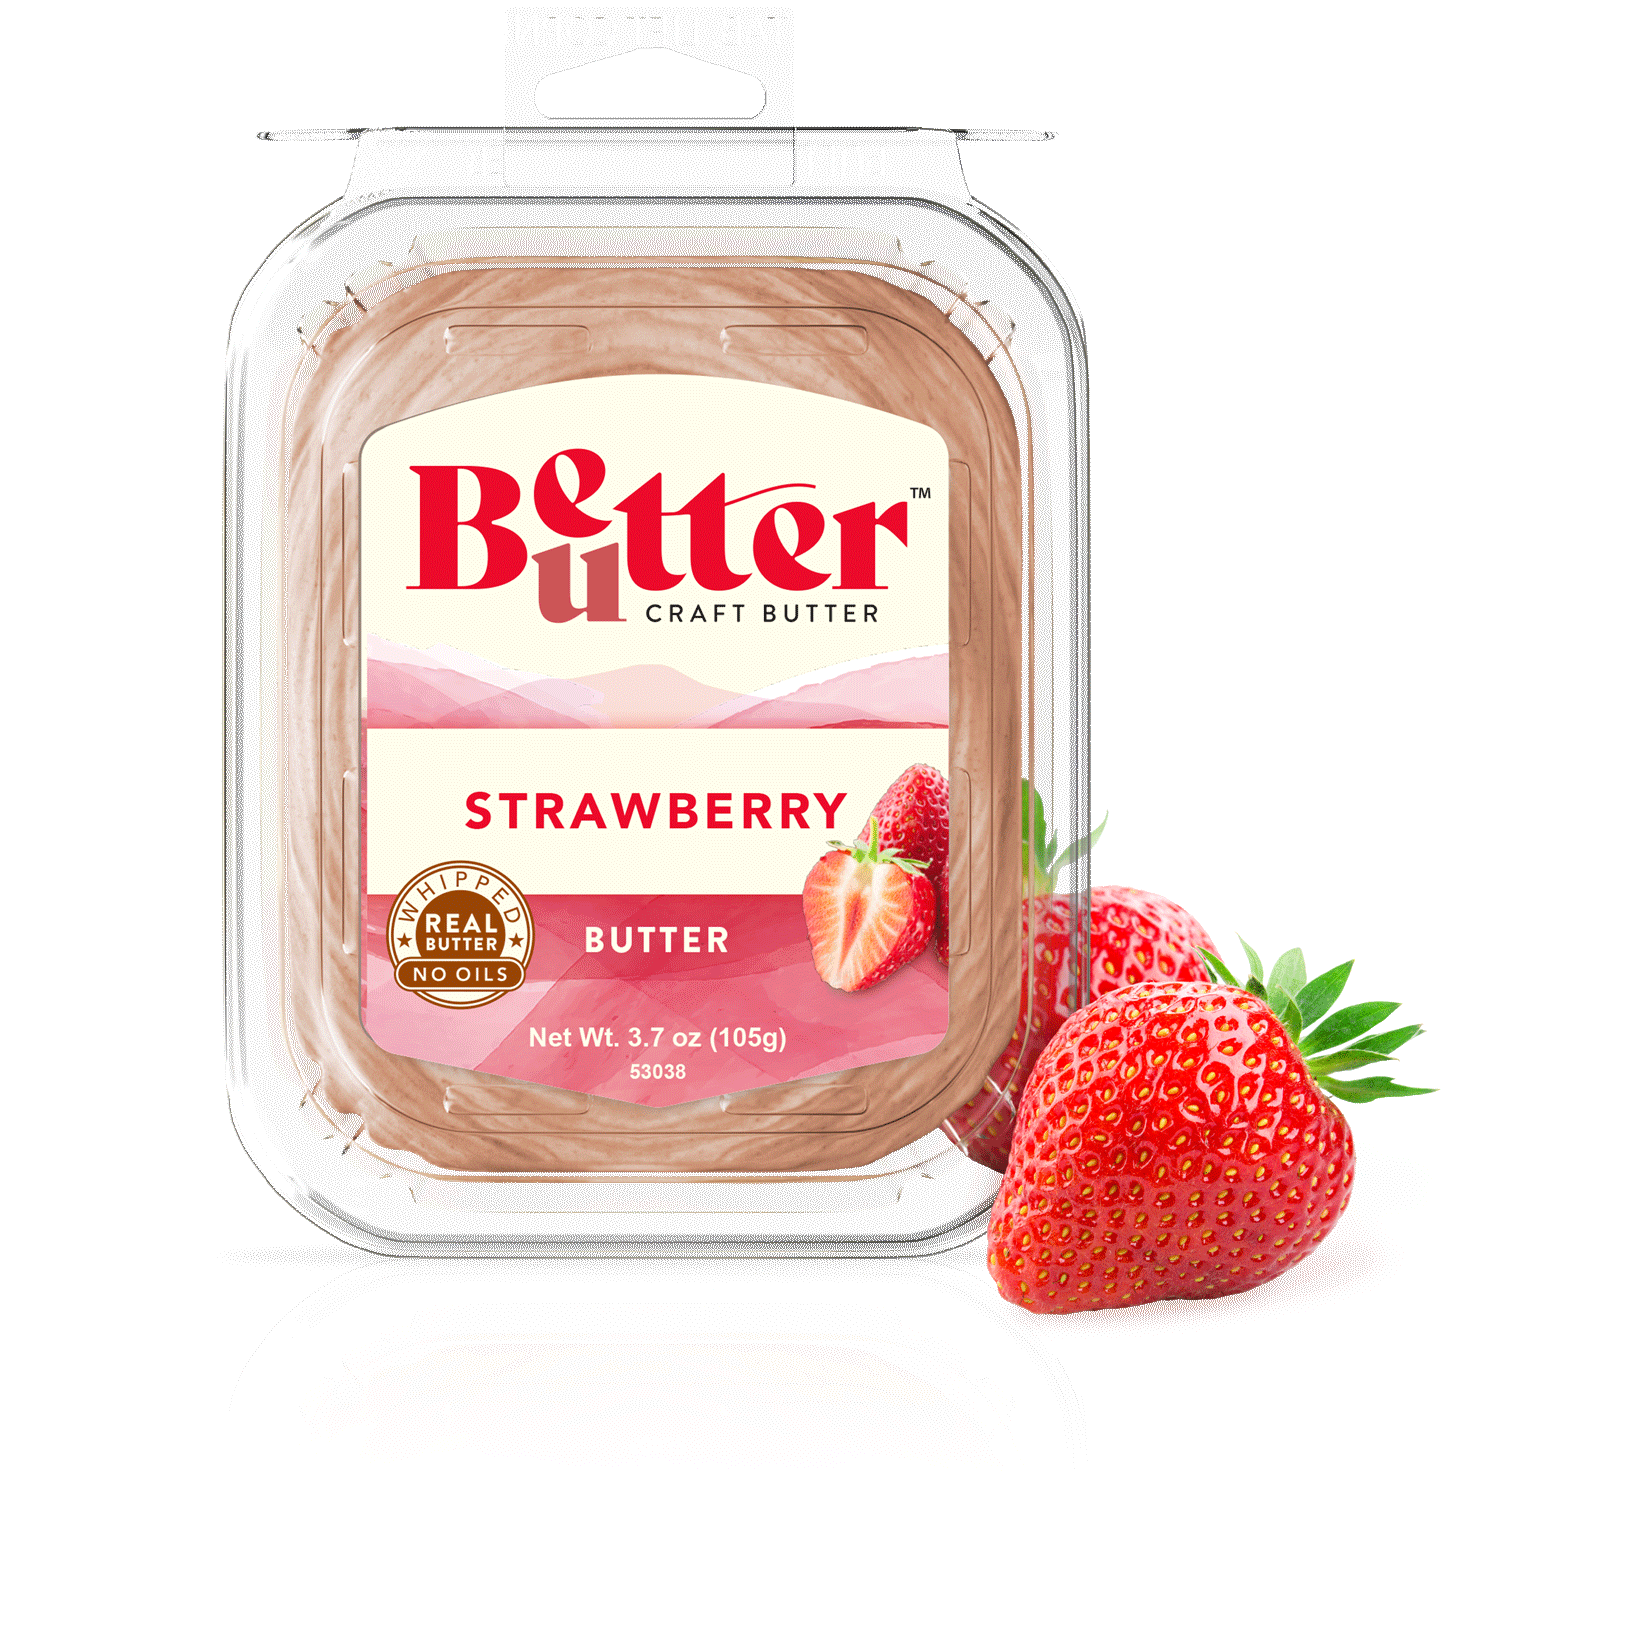 Strawberry Craft Butter